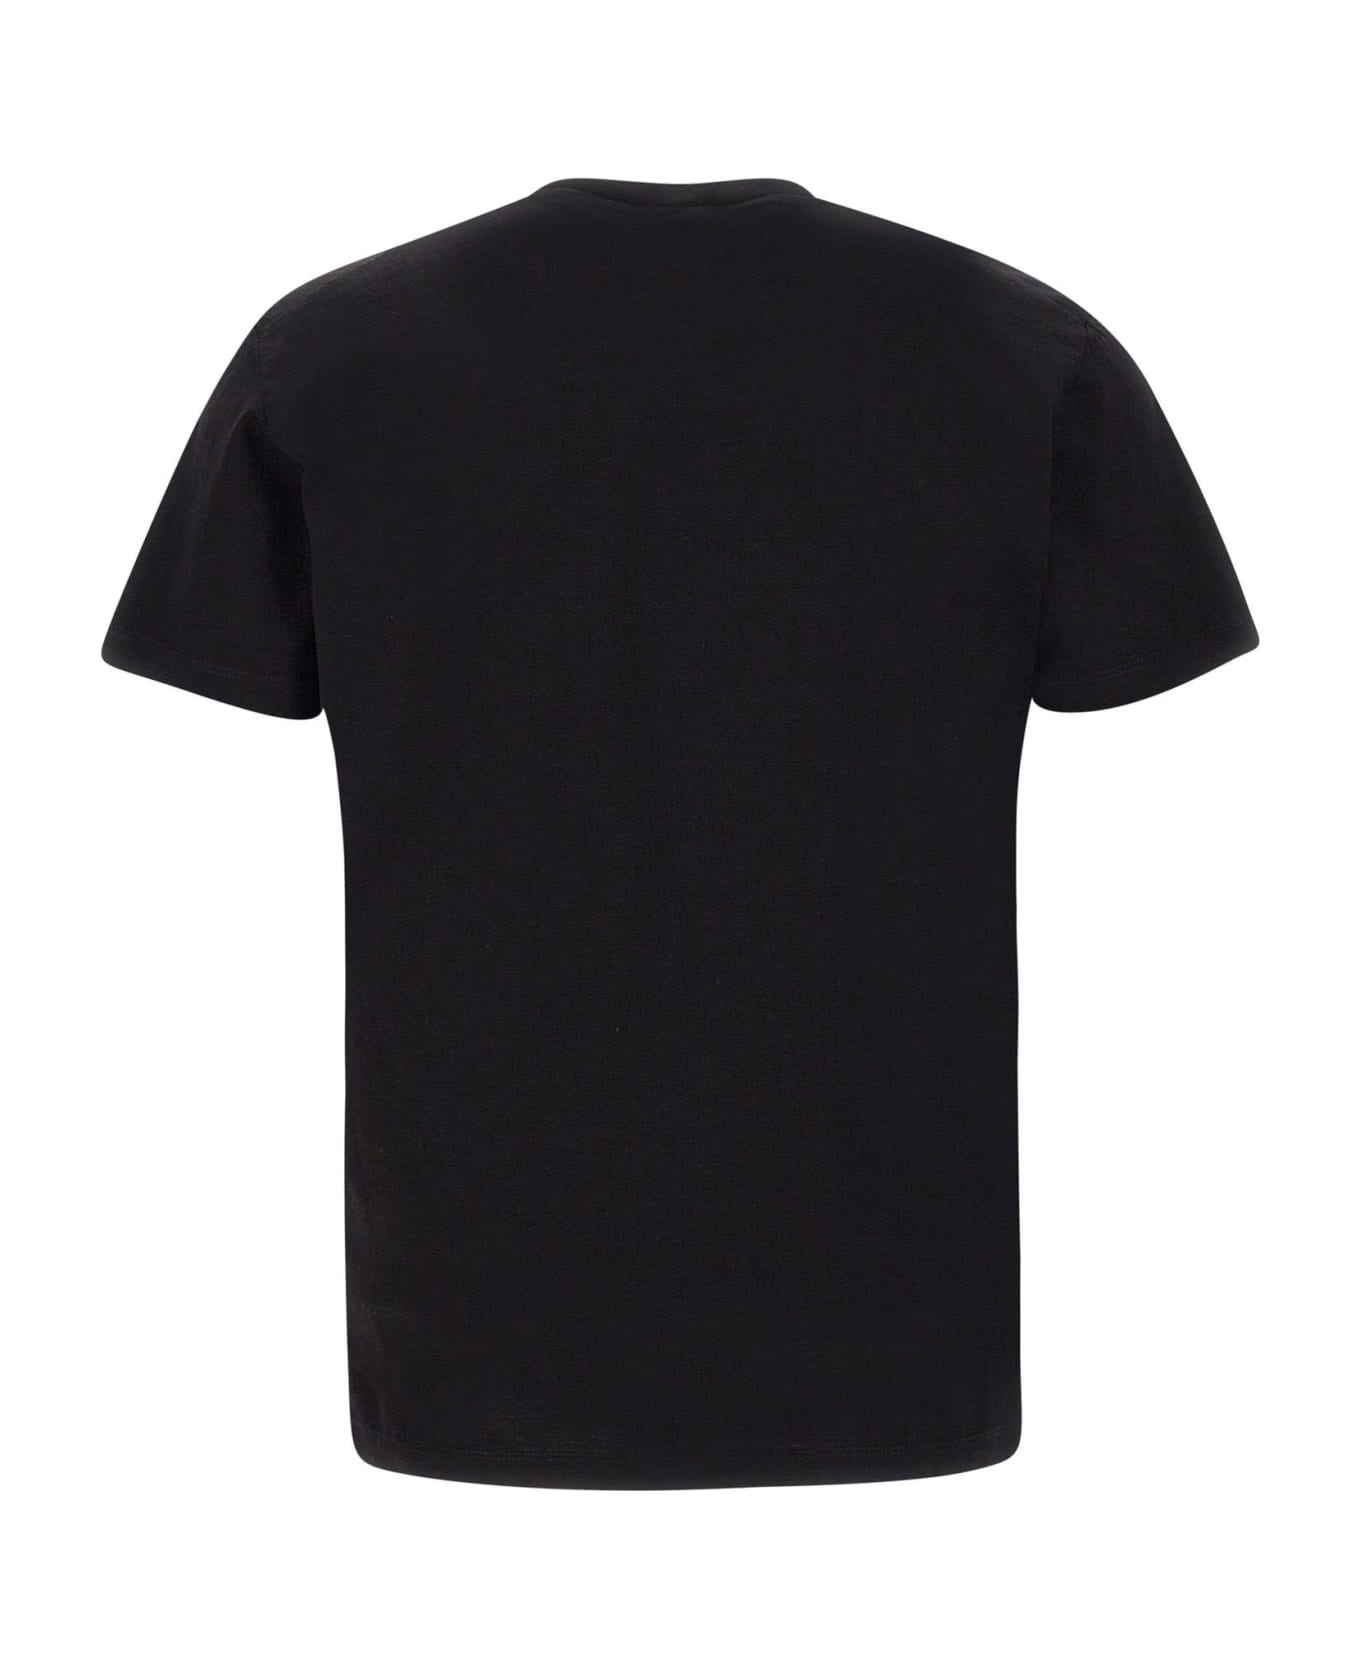 Dsquared2 Logo Printed Short-sleeved T-shirt - BLACK